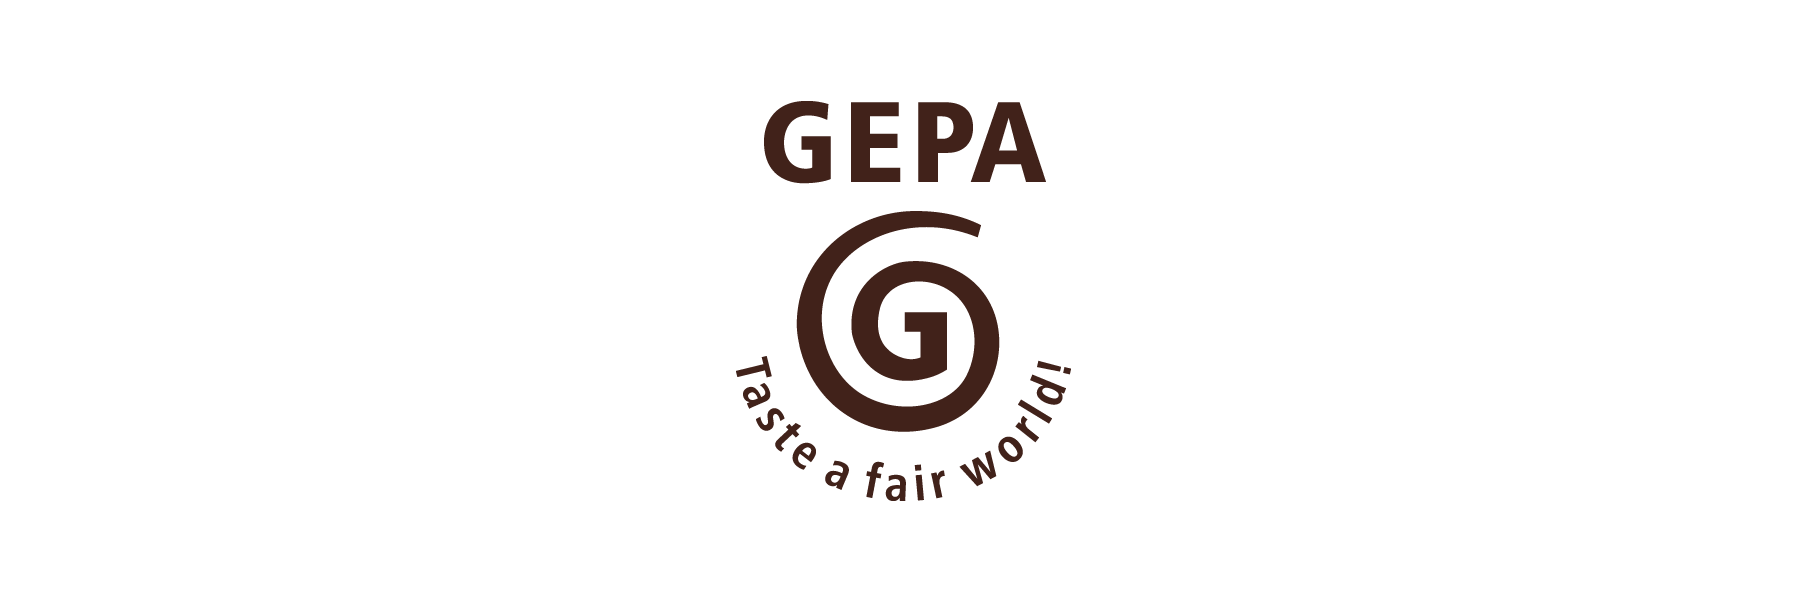 GEPA - The Fair Trade Company 